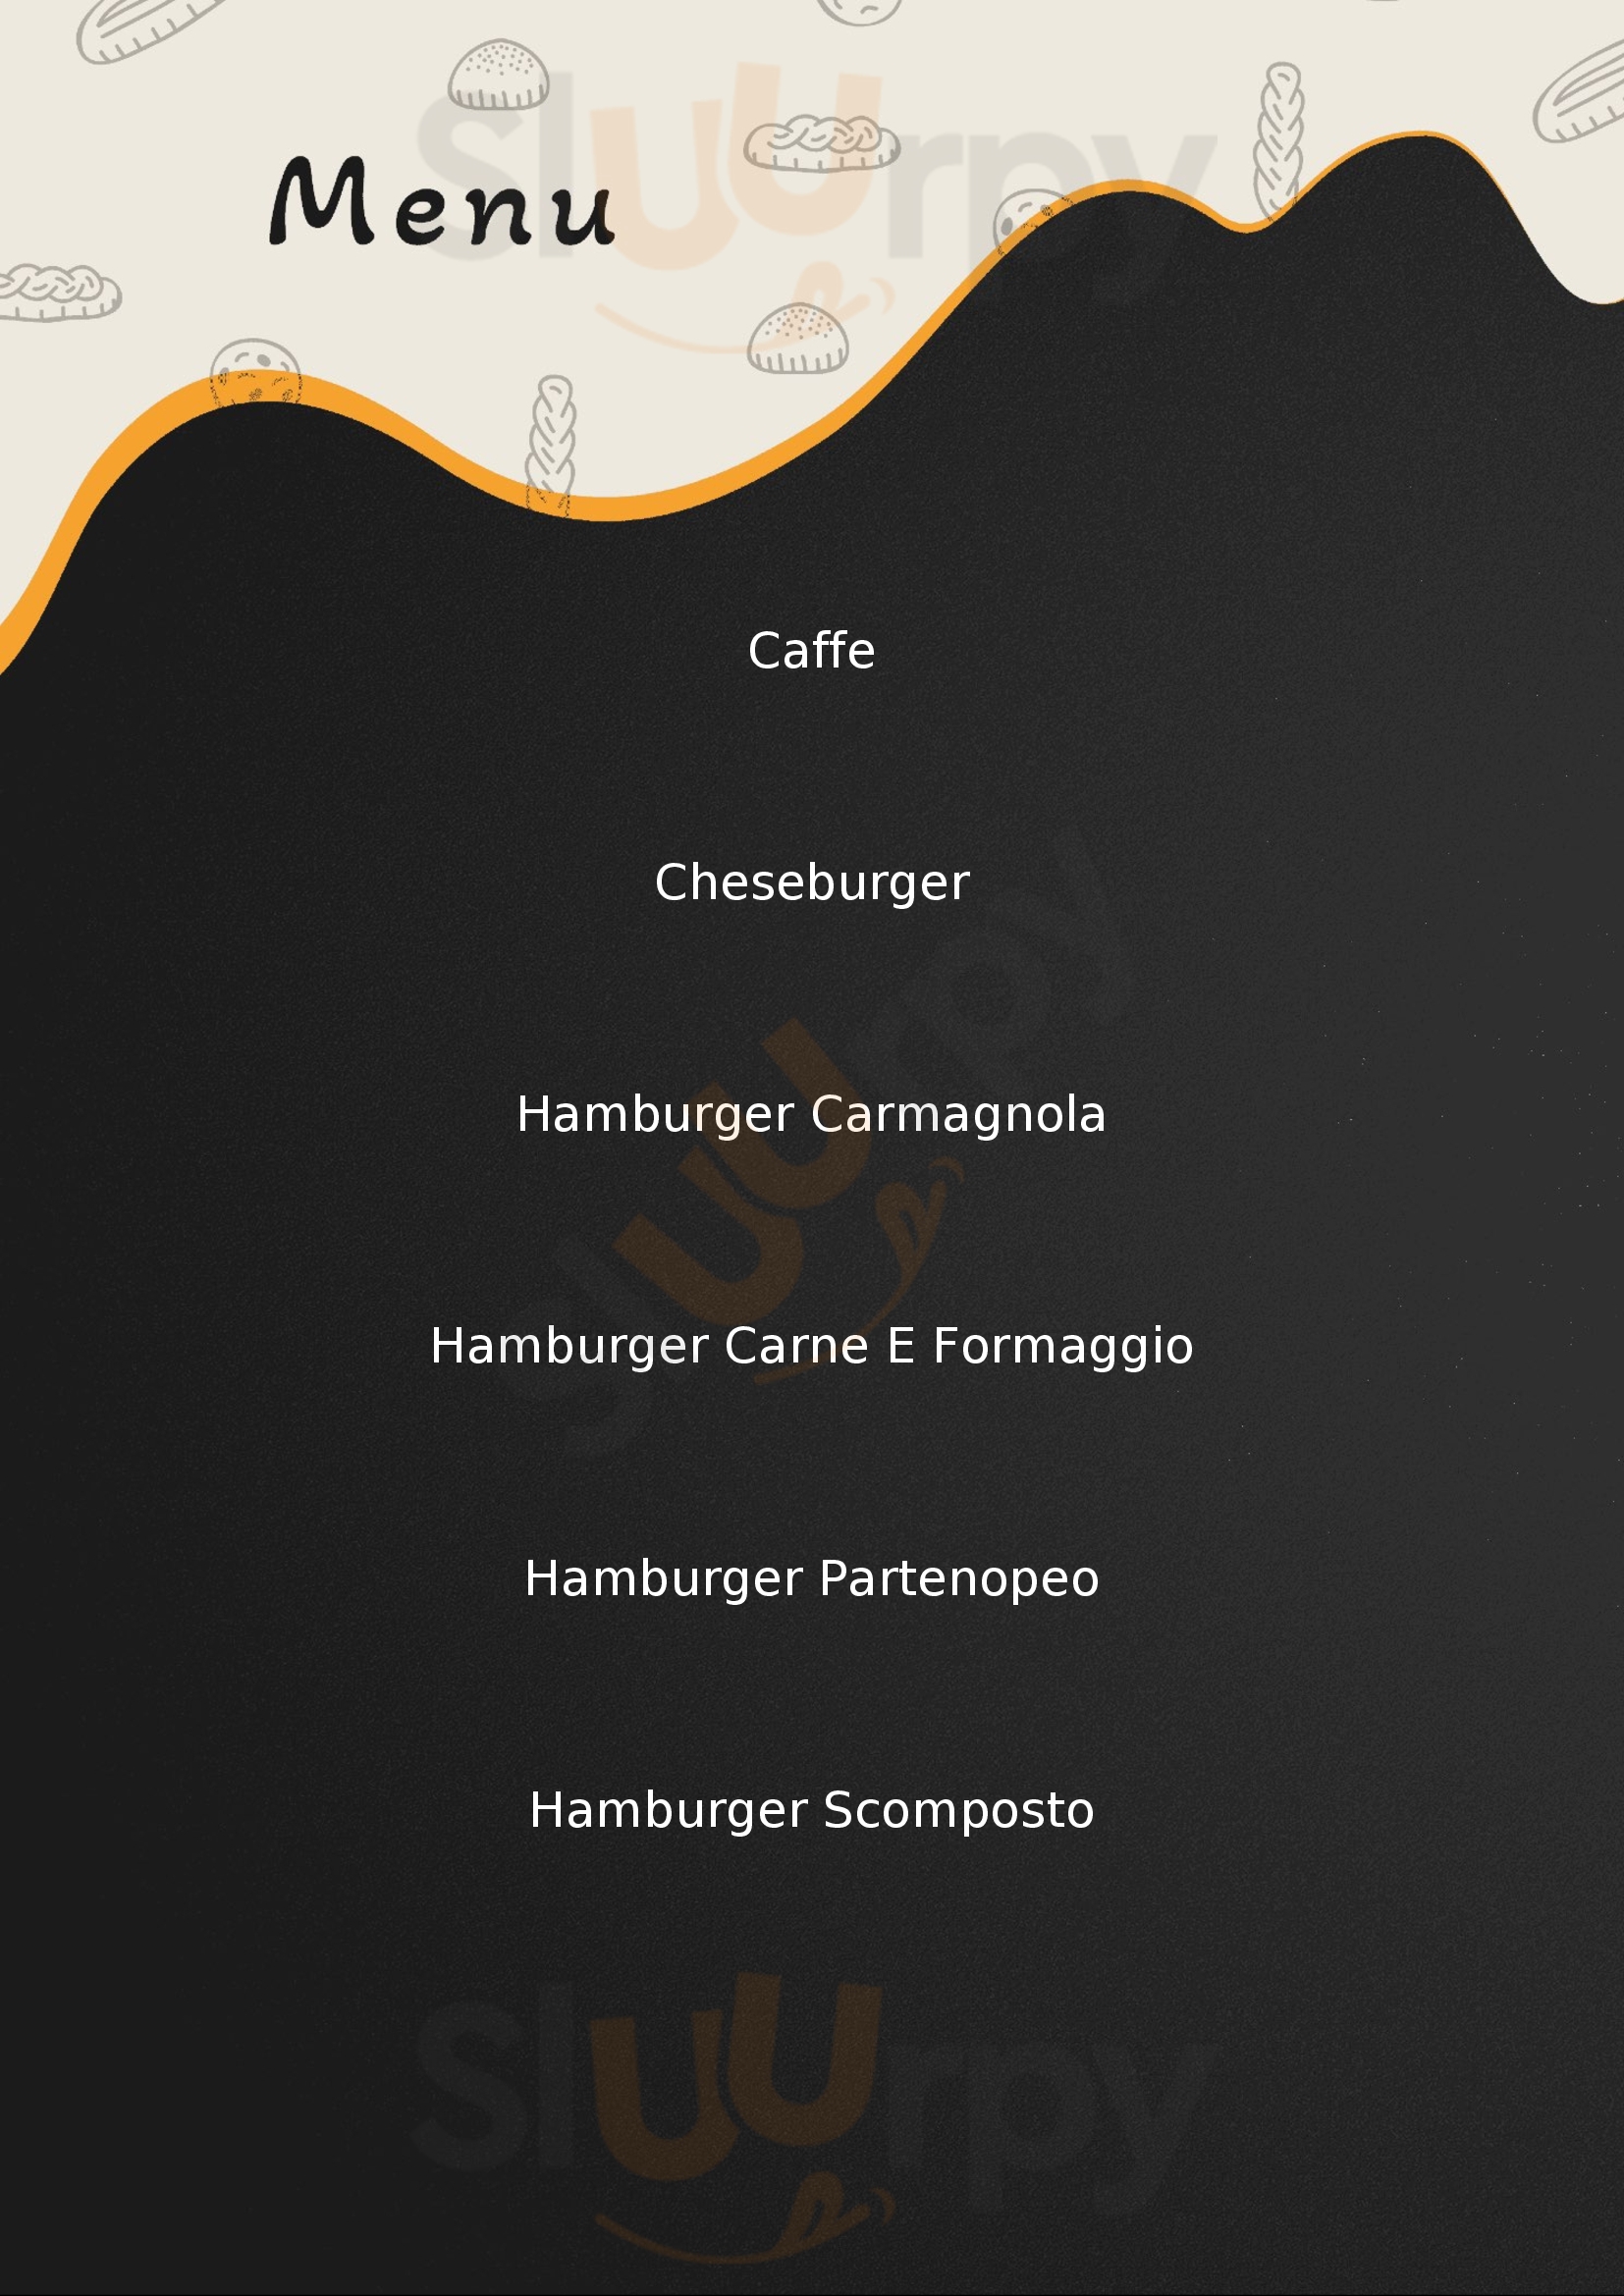 Hamburgeria Meat & Fish Rivalta di Torino menù 1 pagina